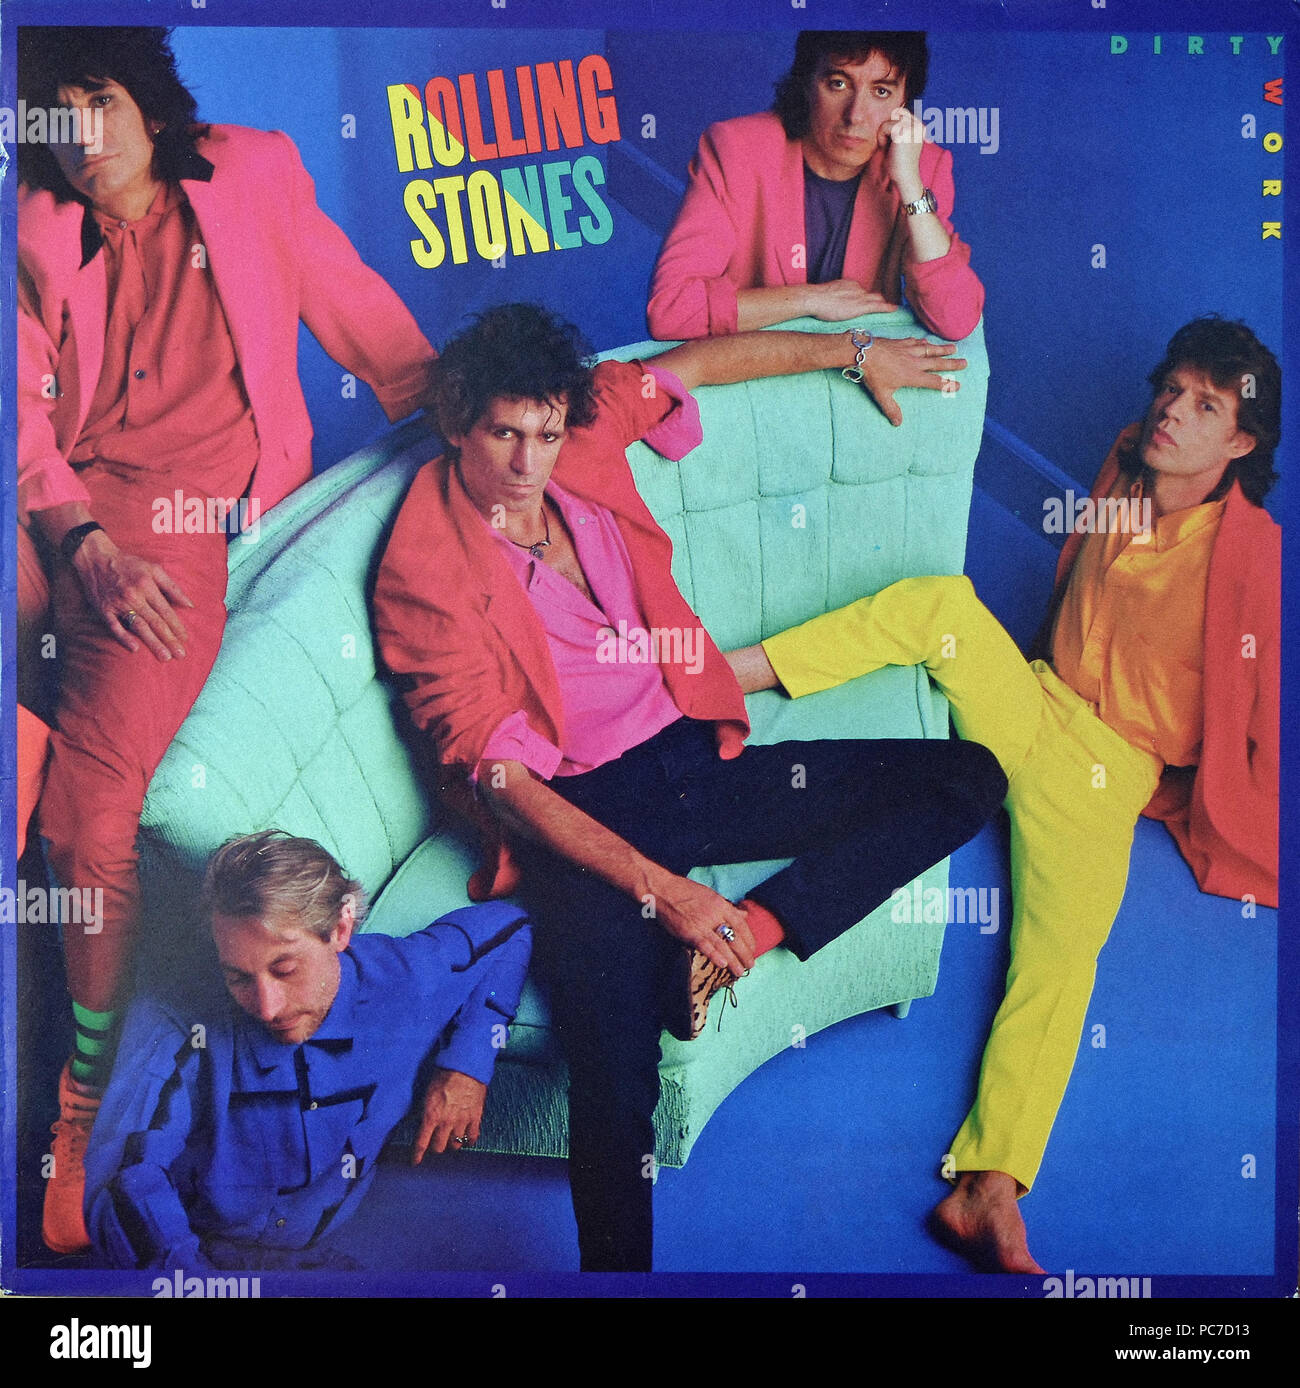 Il Rolling Stones - lavoro sporco - Vintage vinile copertina album